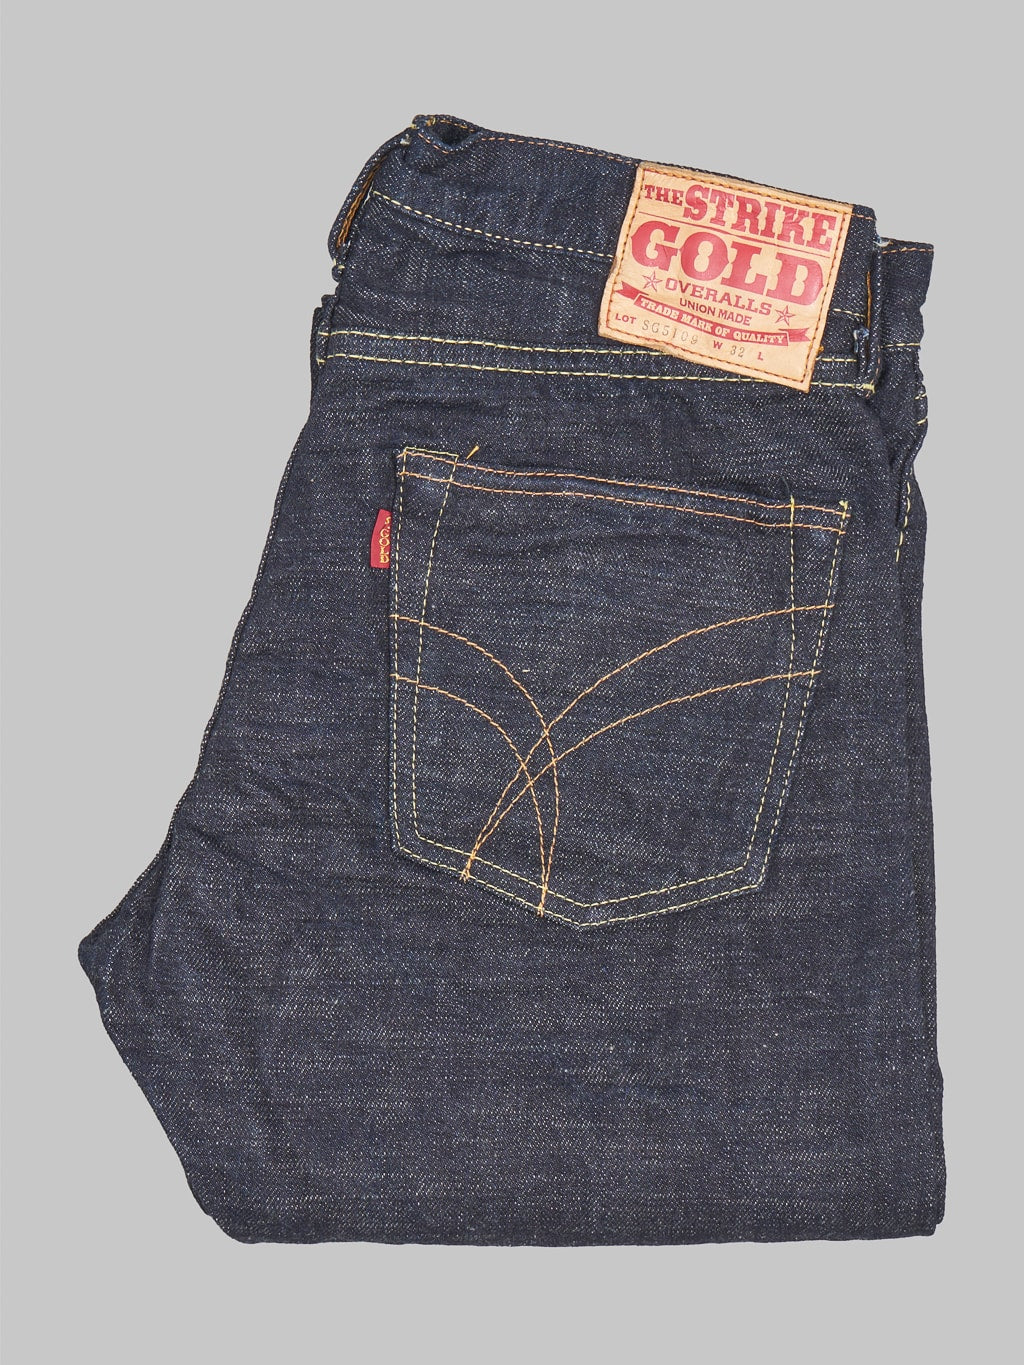 The Strike Gold 5109 15oz Slub Grey Weft Slim Tapered Jeans japanese